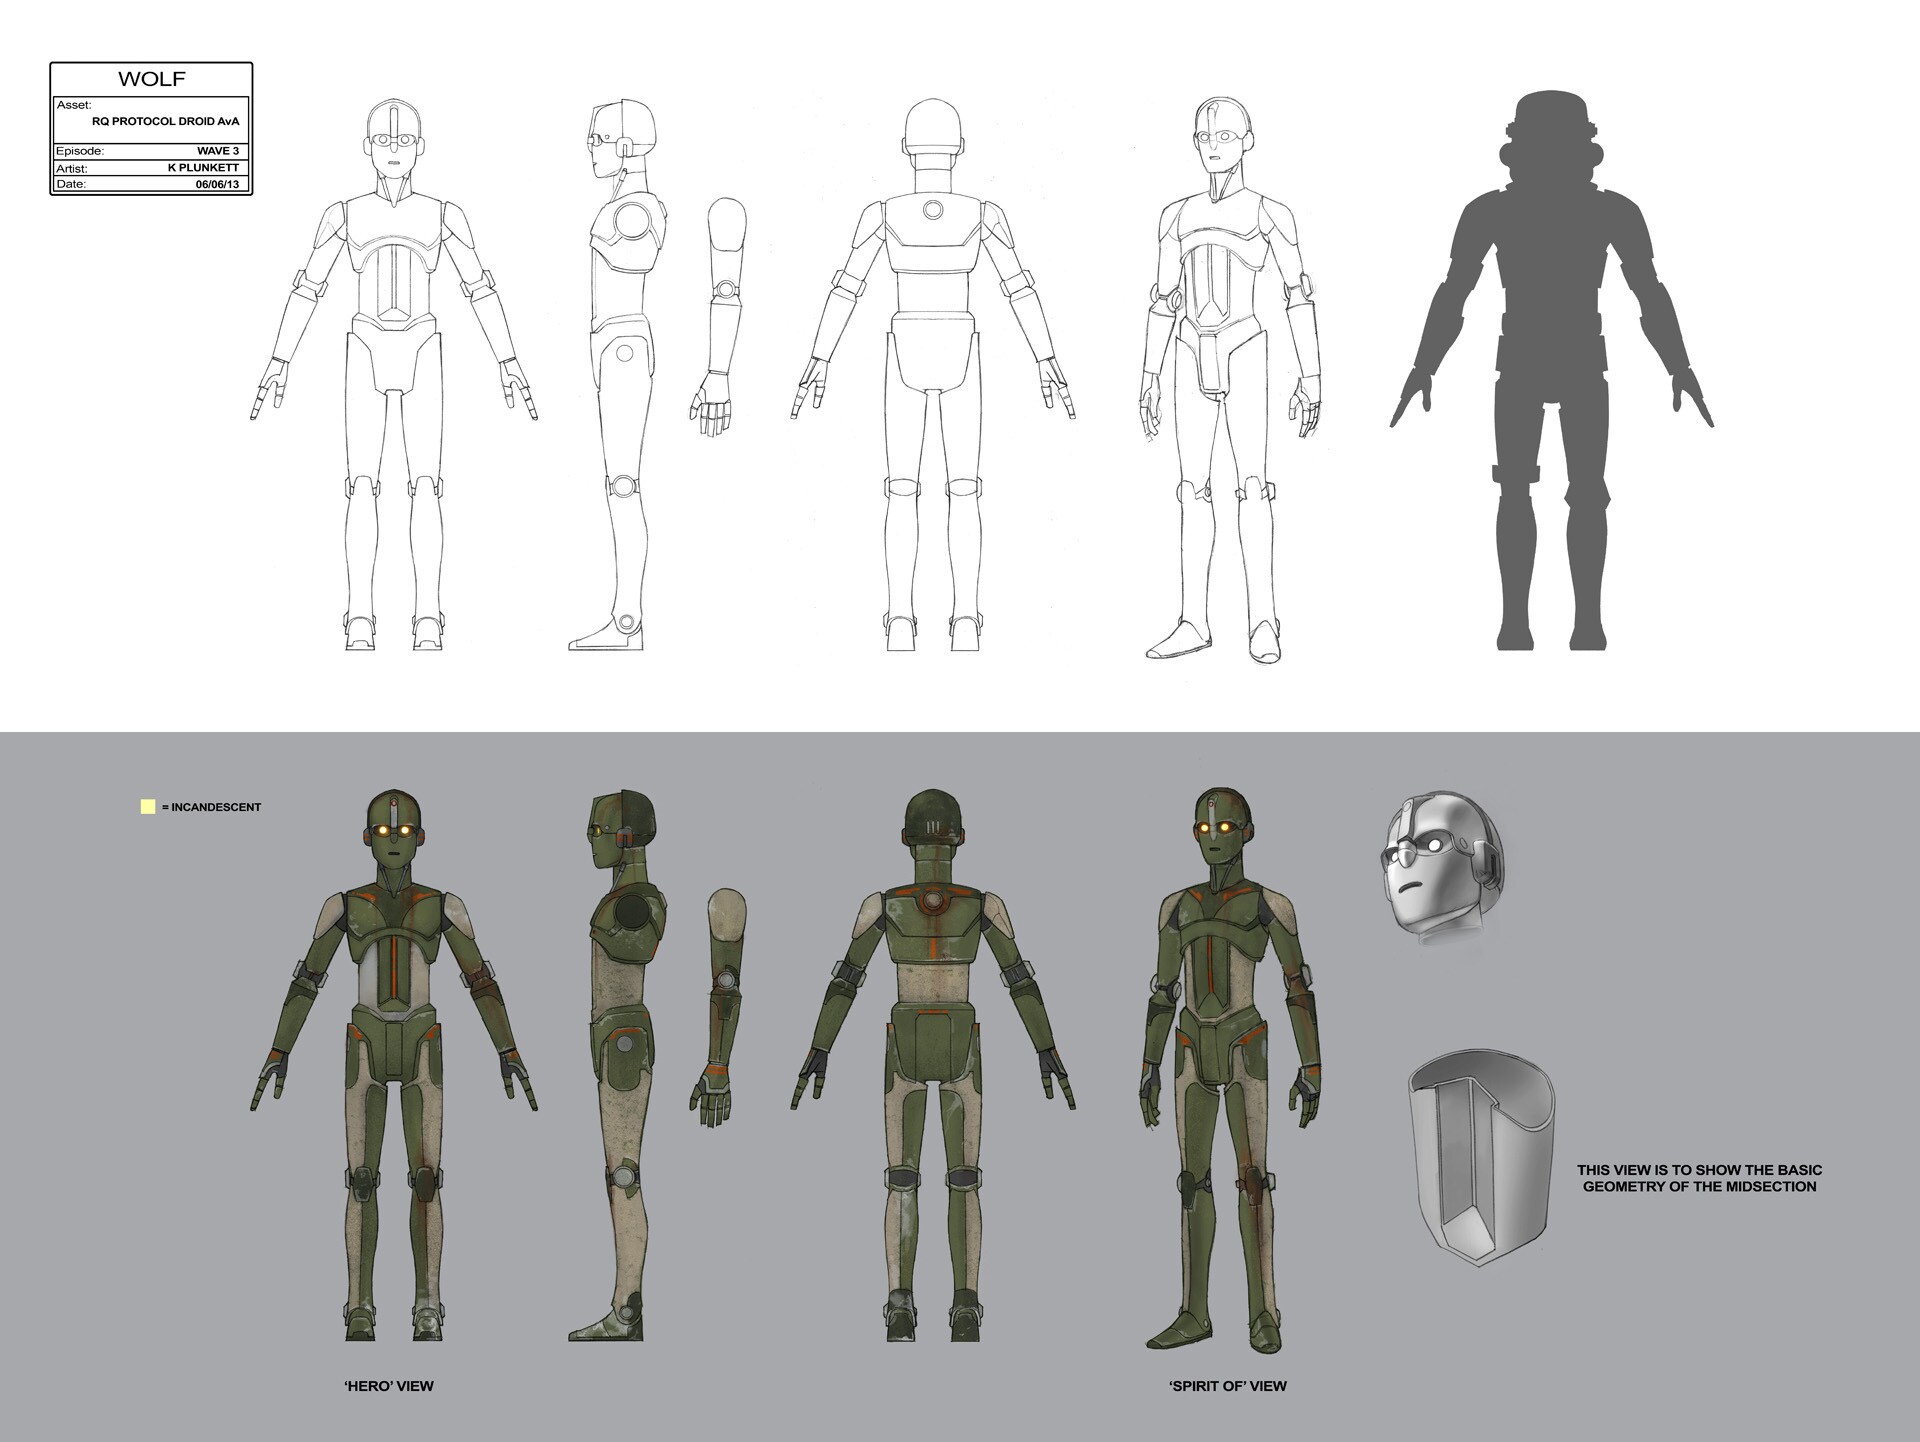 RQ protocol droid full character illustration by Kilian Plunkett.